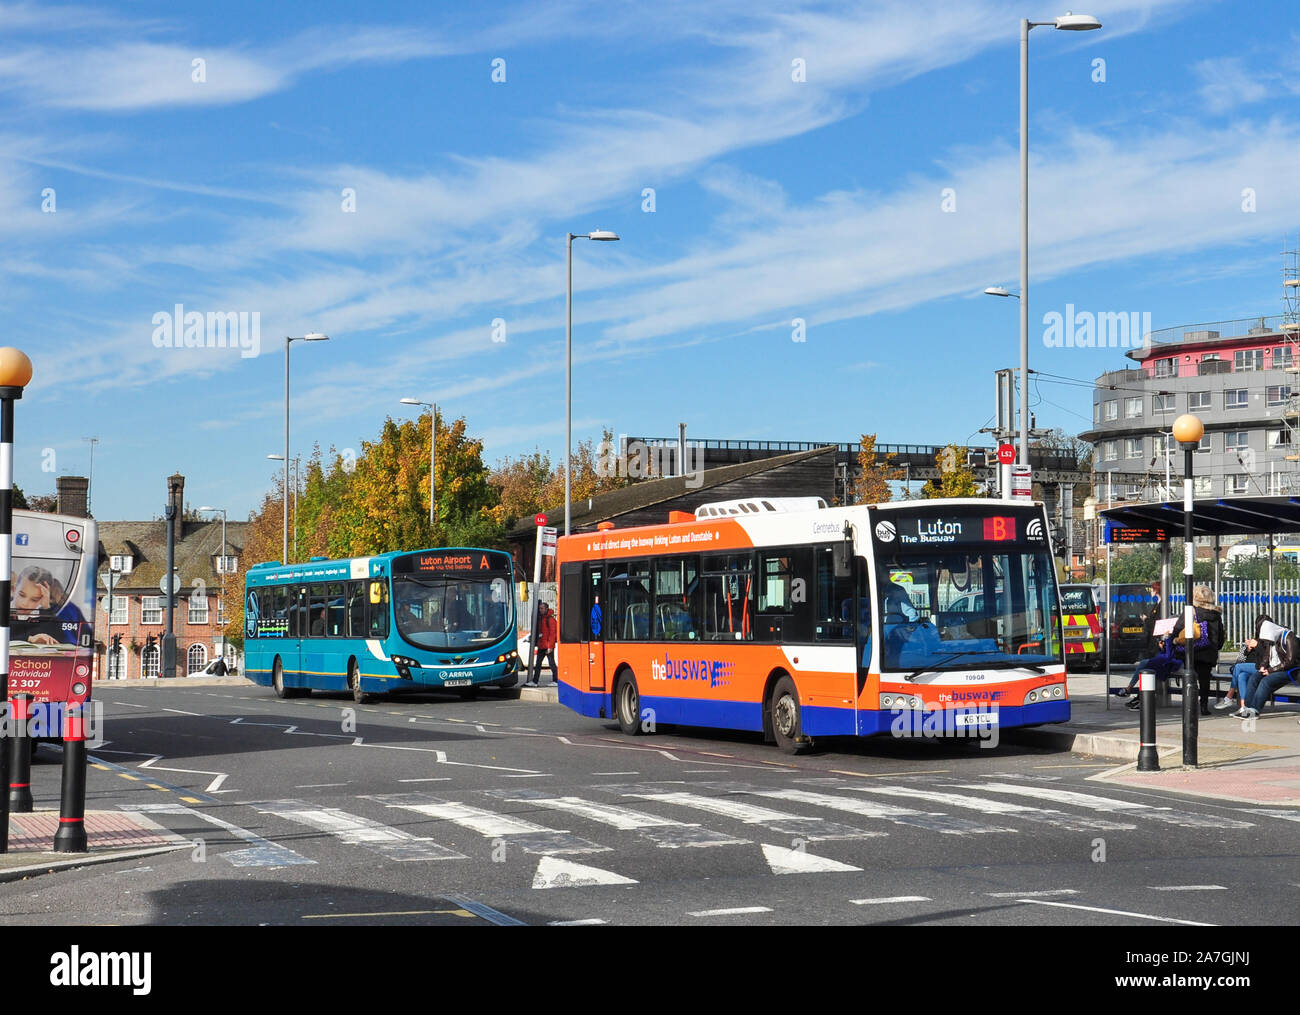 Bus stops outside the railway station, Luton, Bedfordshire, England, UK Stock Photo